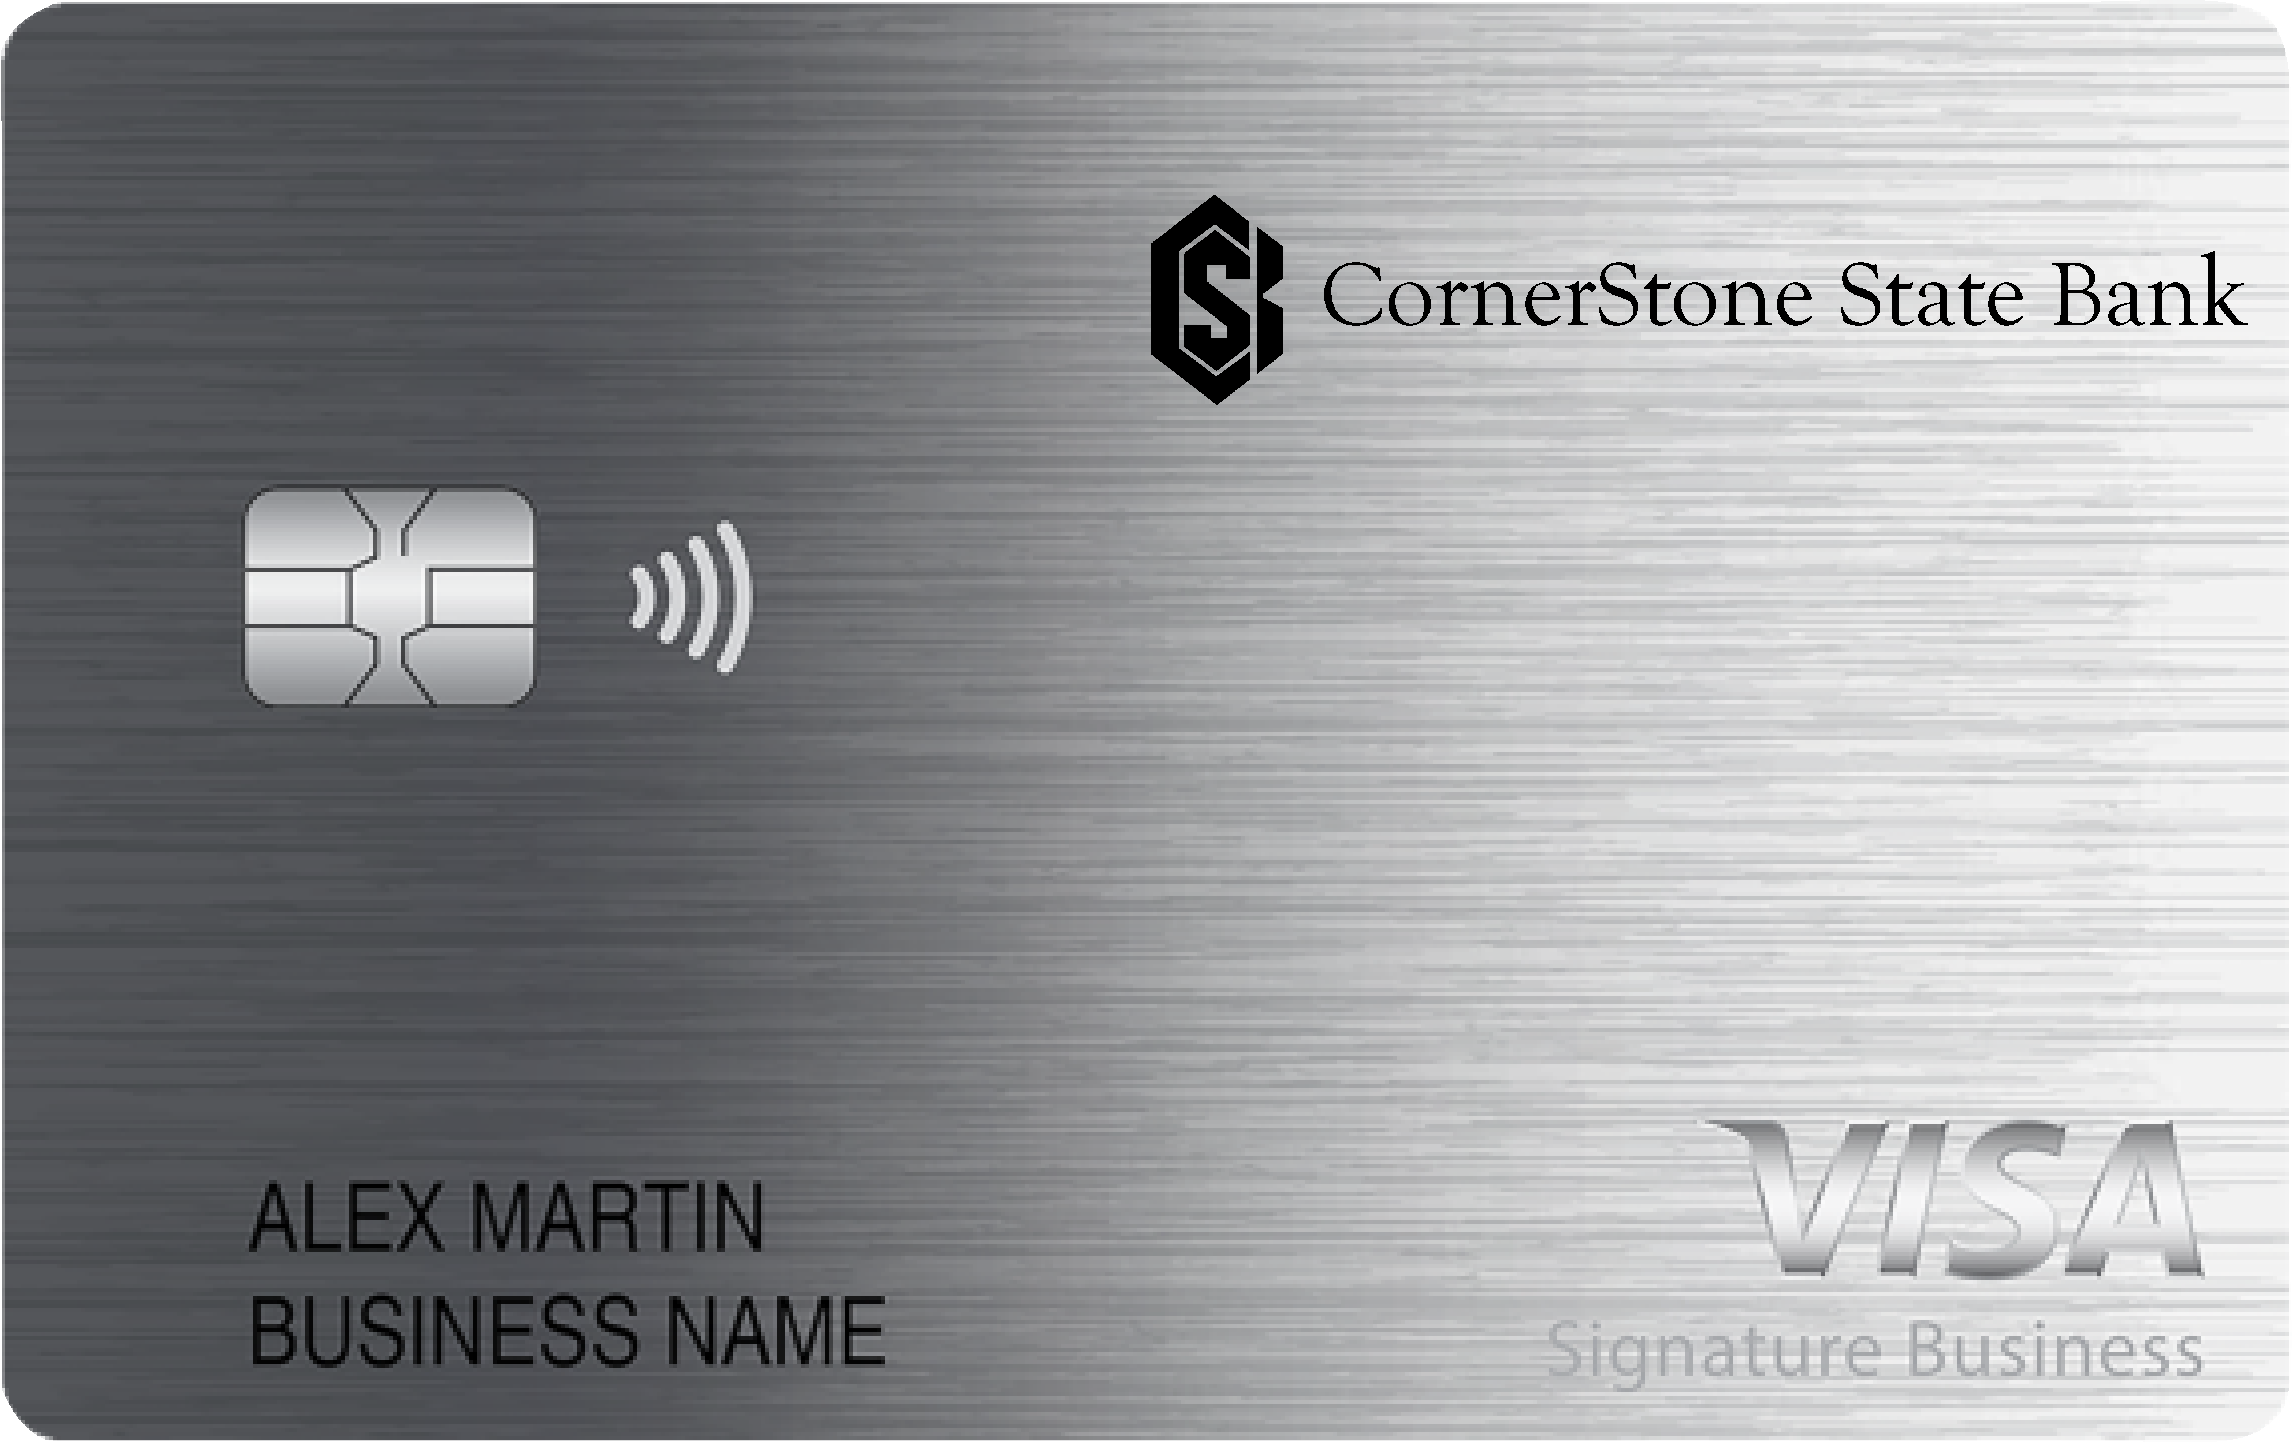 CornerStone State Bank Smart Business Rewards Card